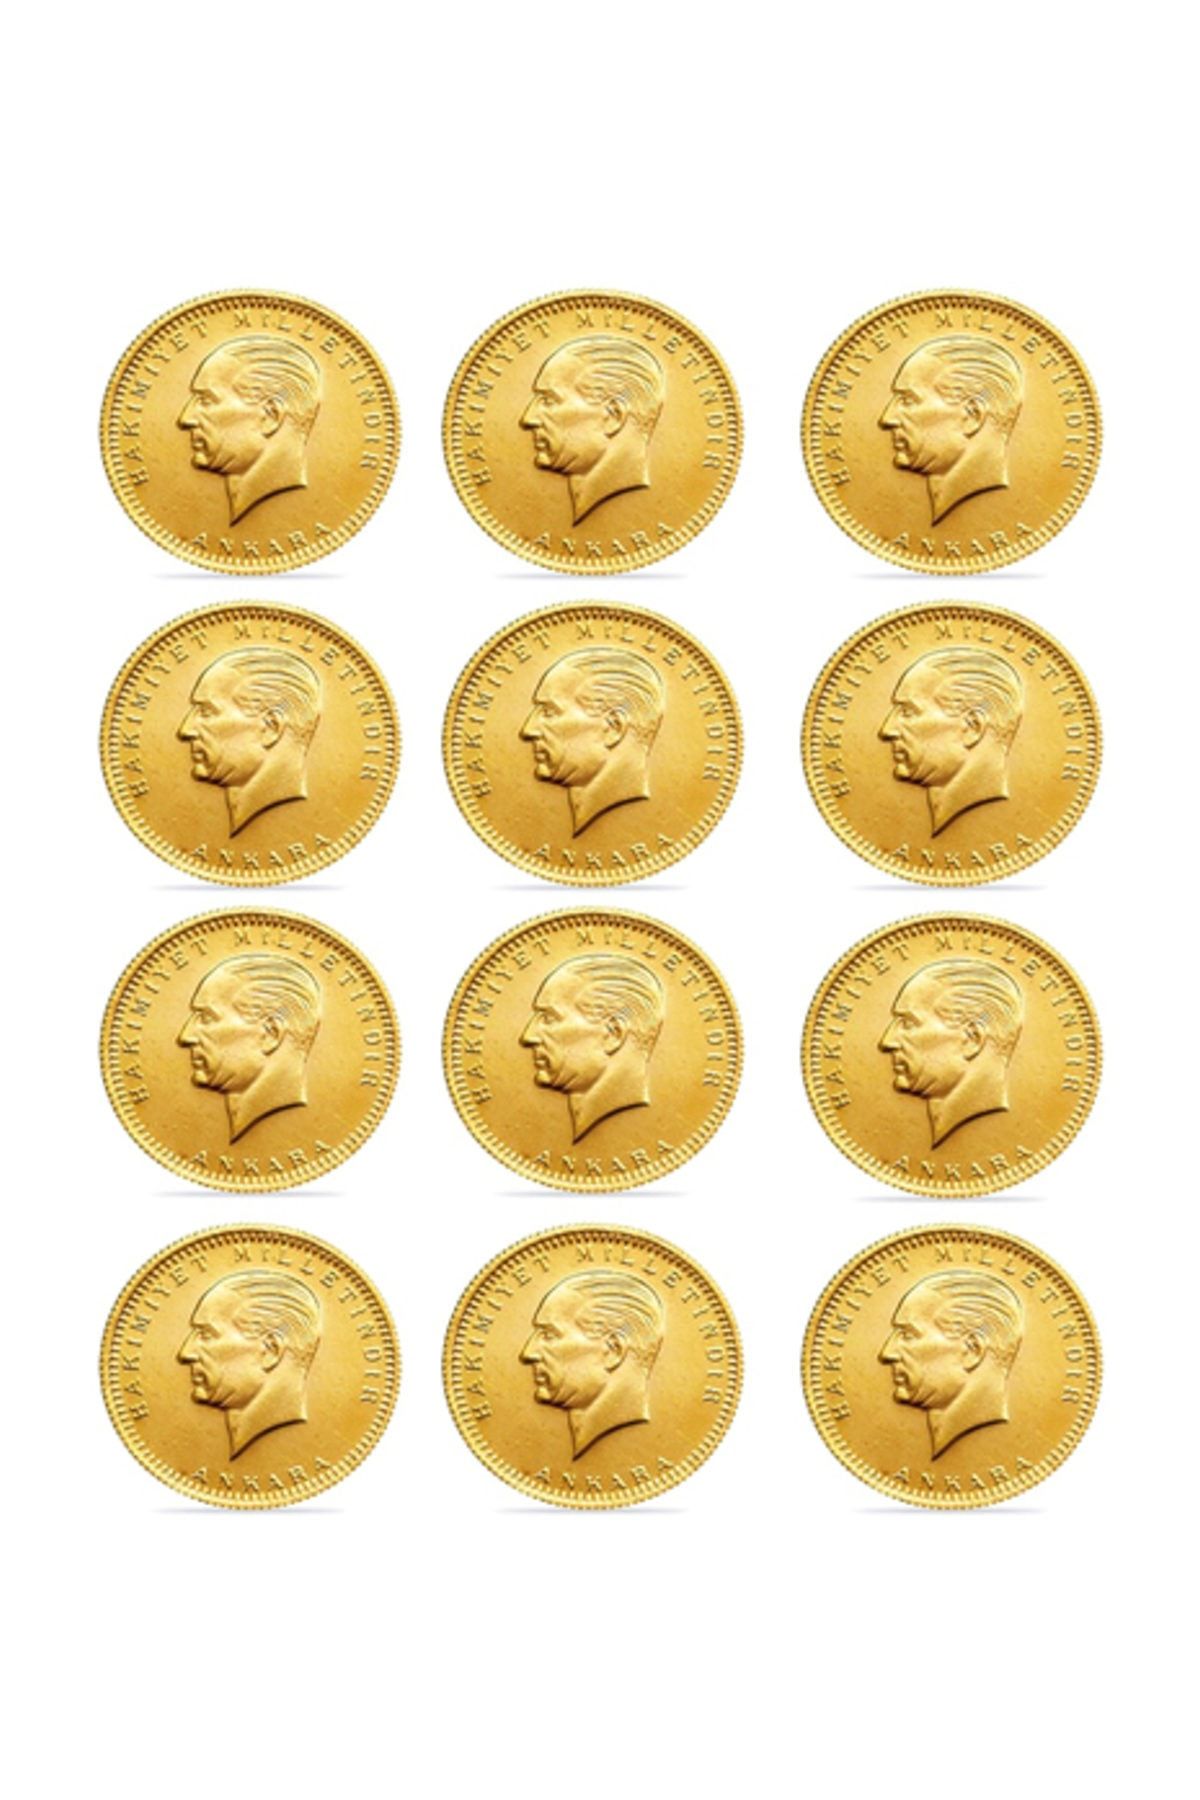 Safır Gold 12  Adet YENİ Tarihli Ata Lira Cumhuriyet Altın